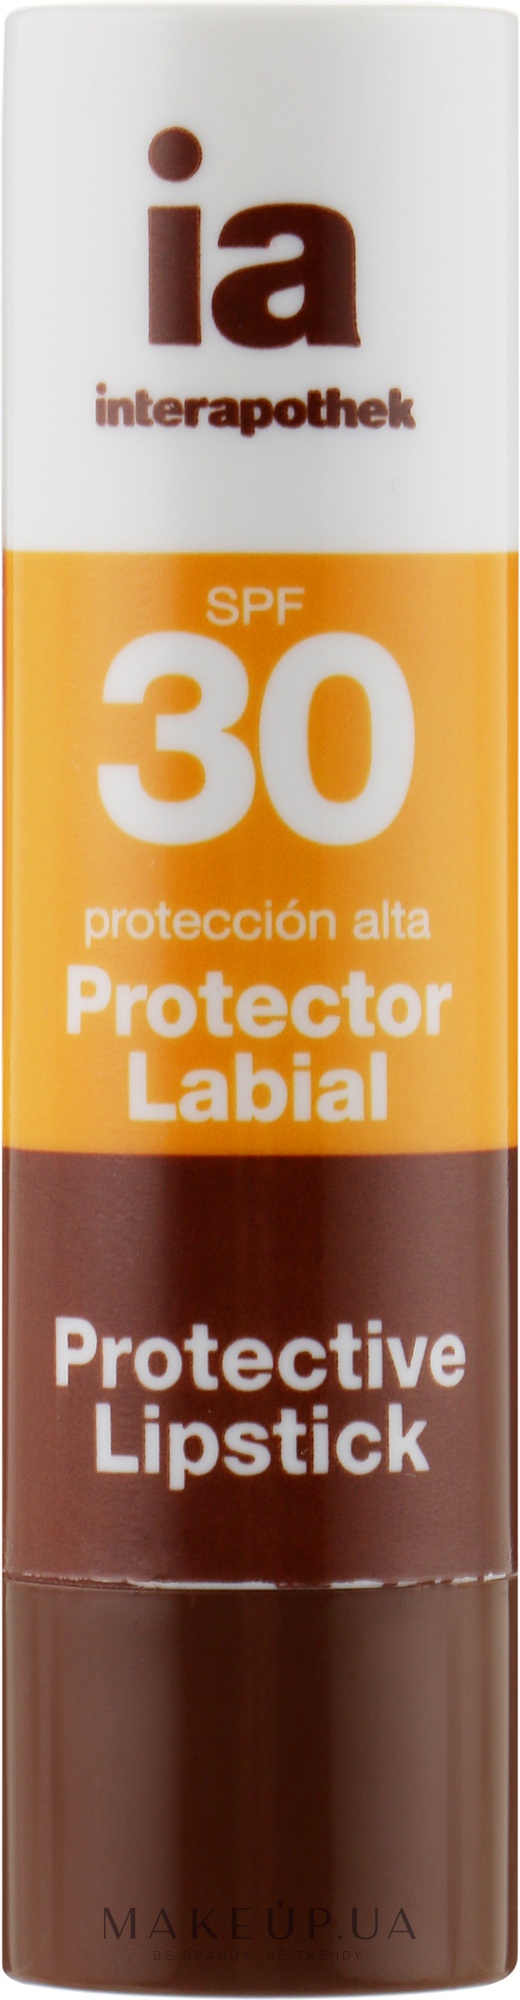 Interapothek SPF 30 Protective Lipstick